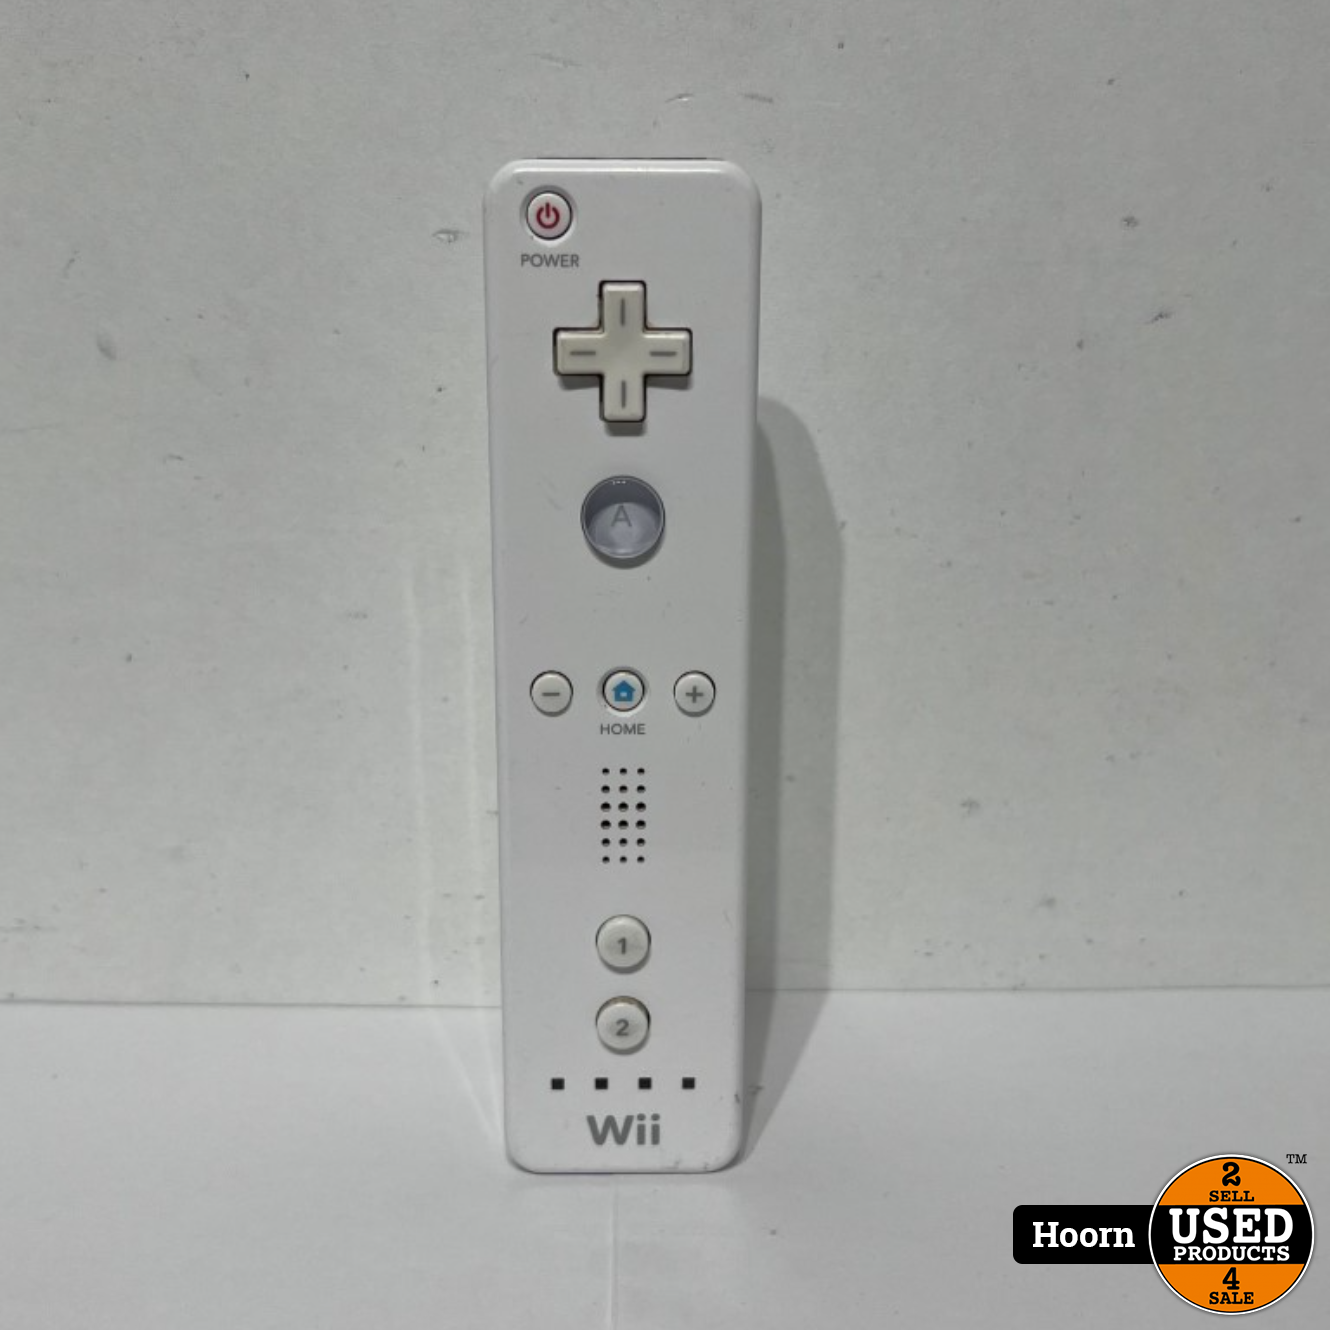 Nintendo Wii Controller - Products Hoorn